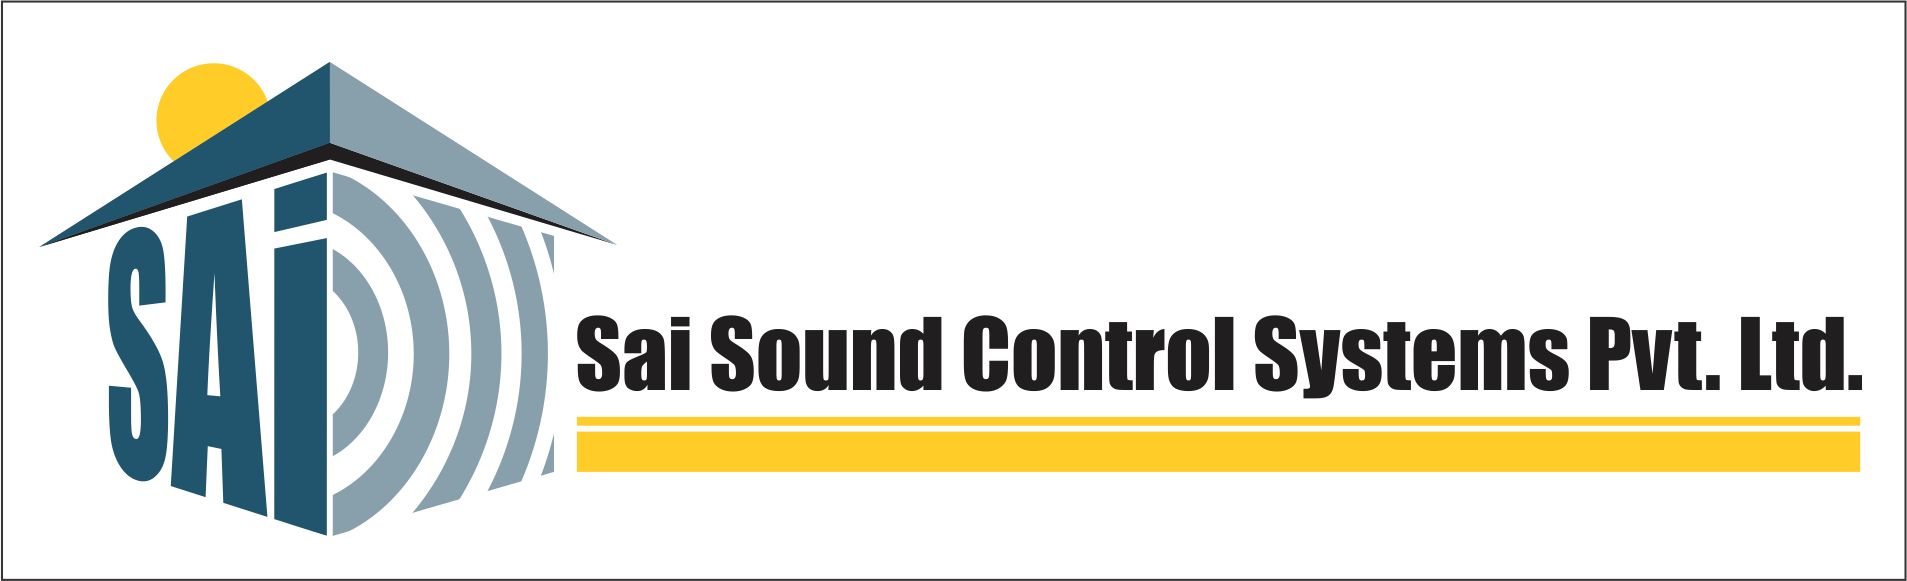 sai-sound-control-systems-logo-graphic-design